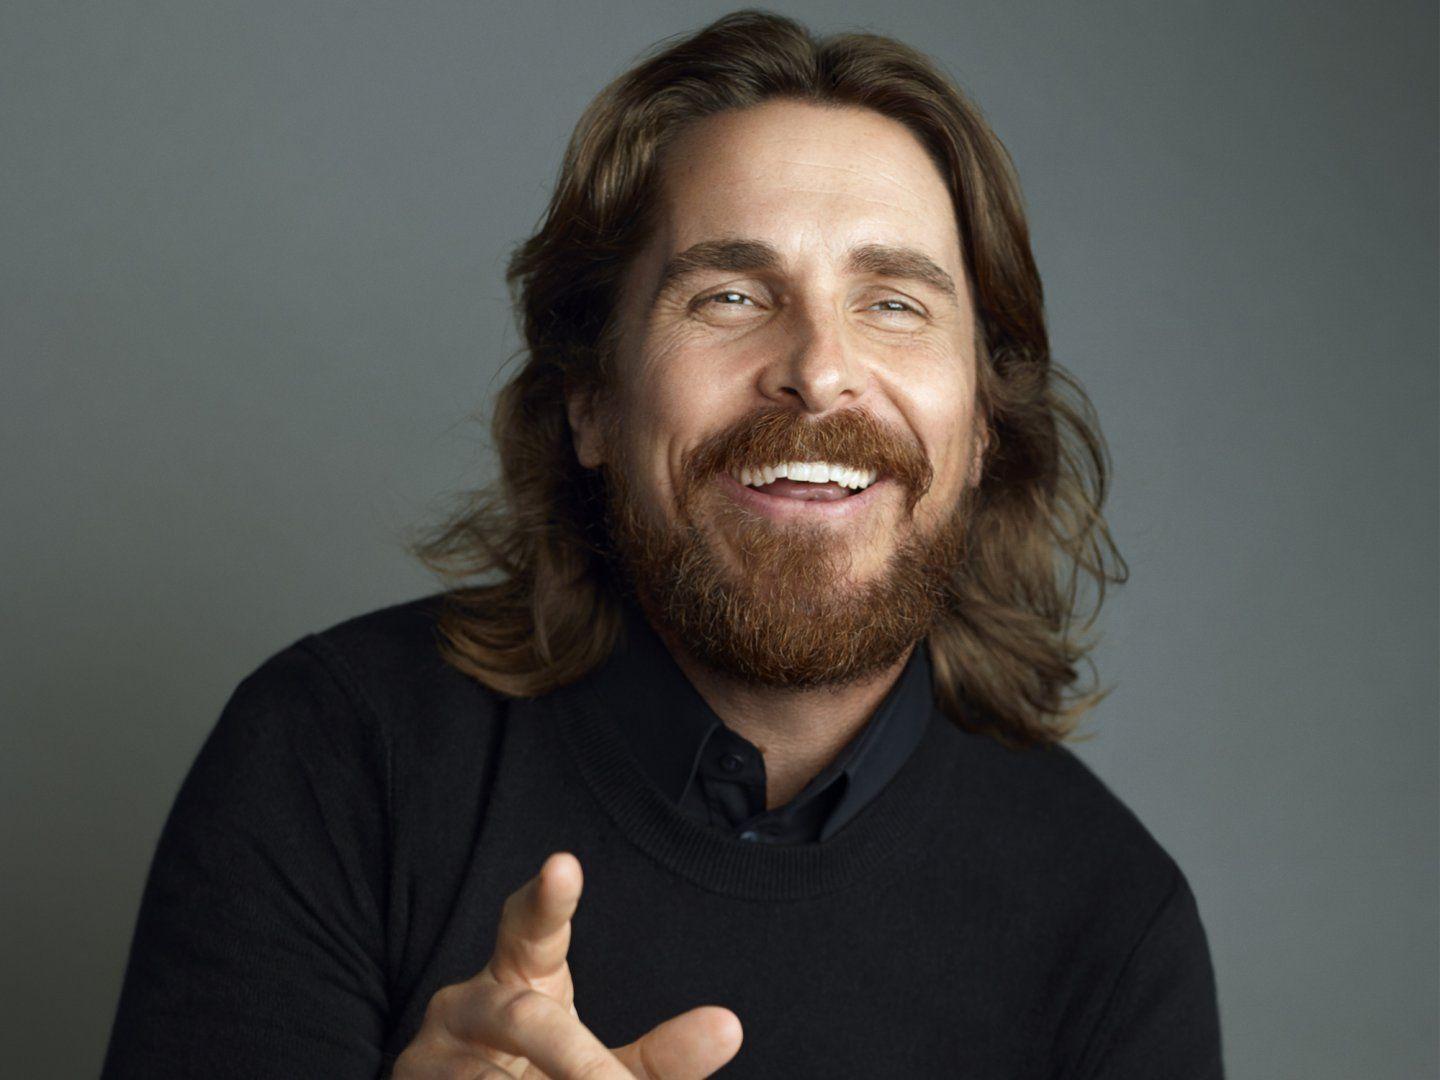 Christian Bale Wallpaper Image New